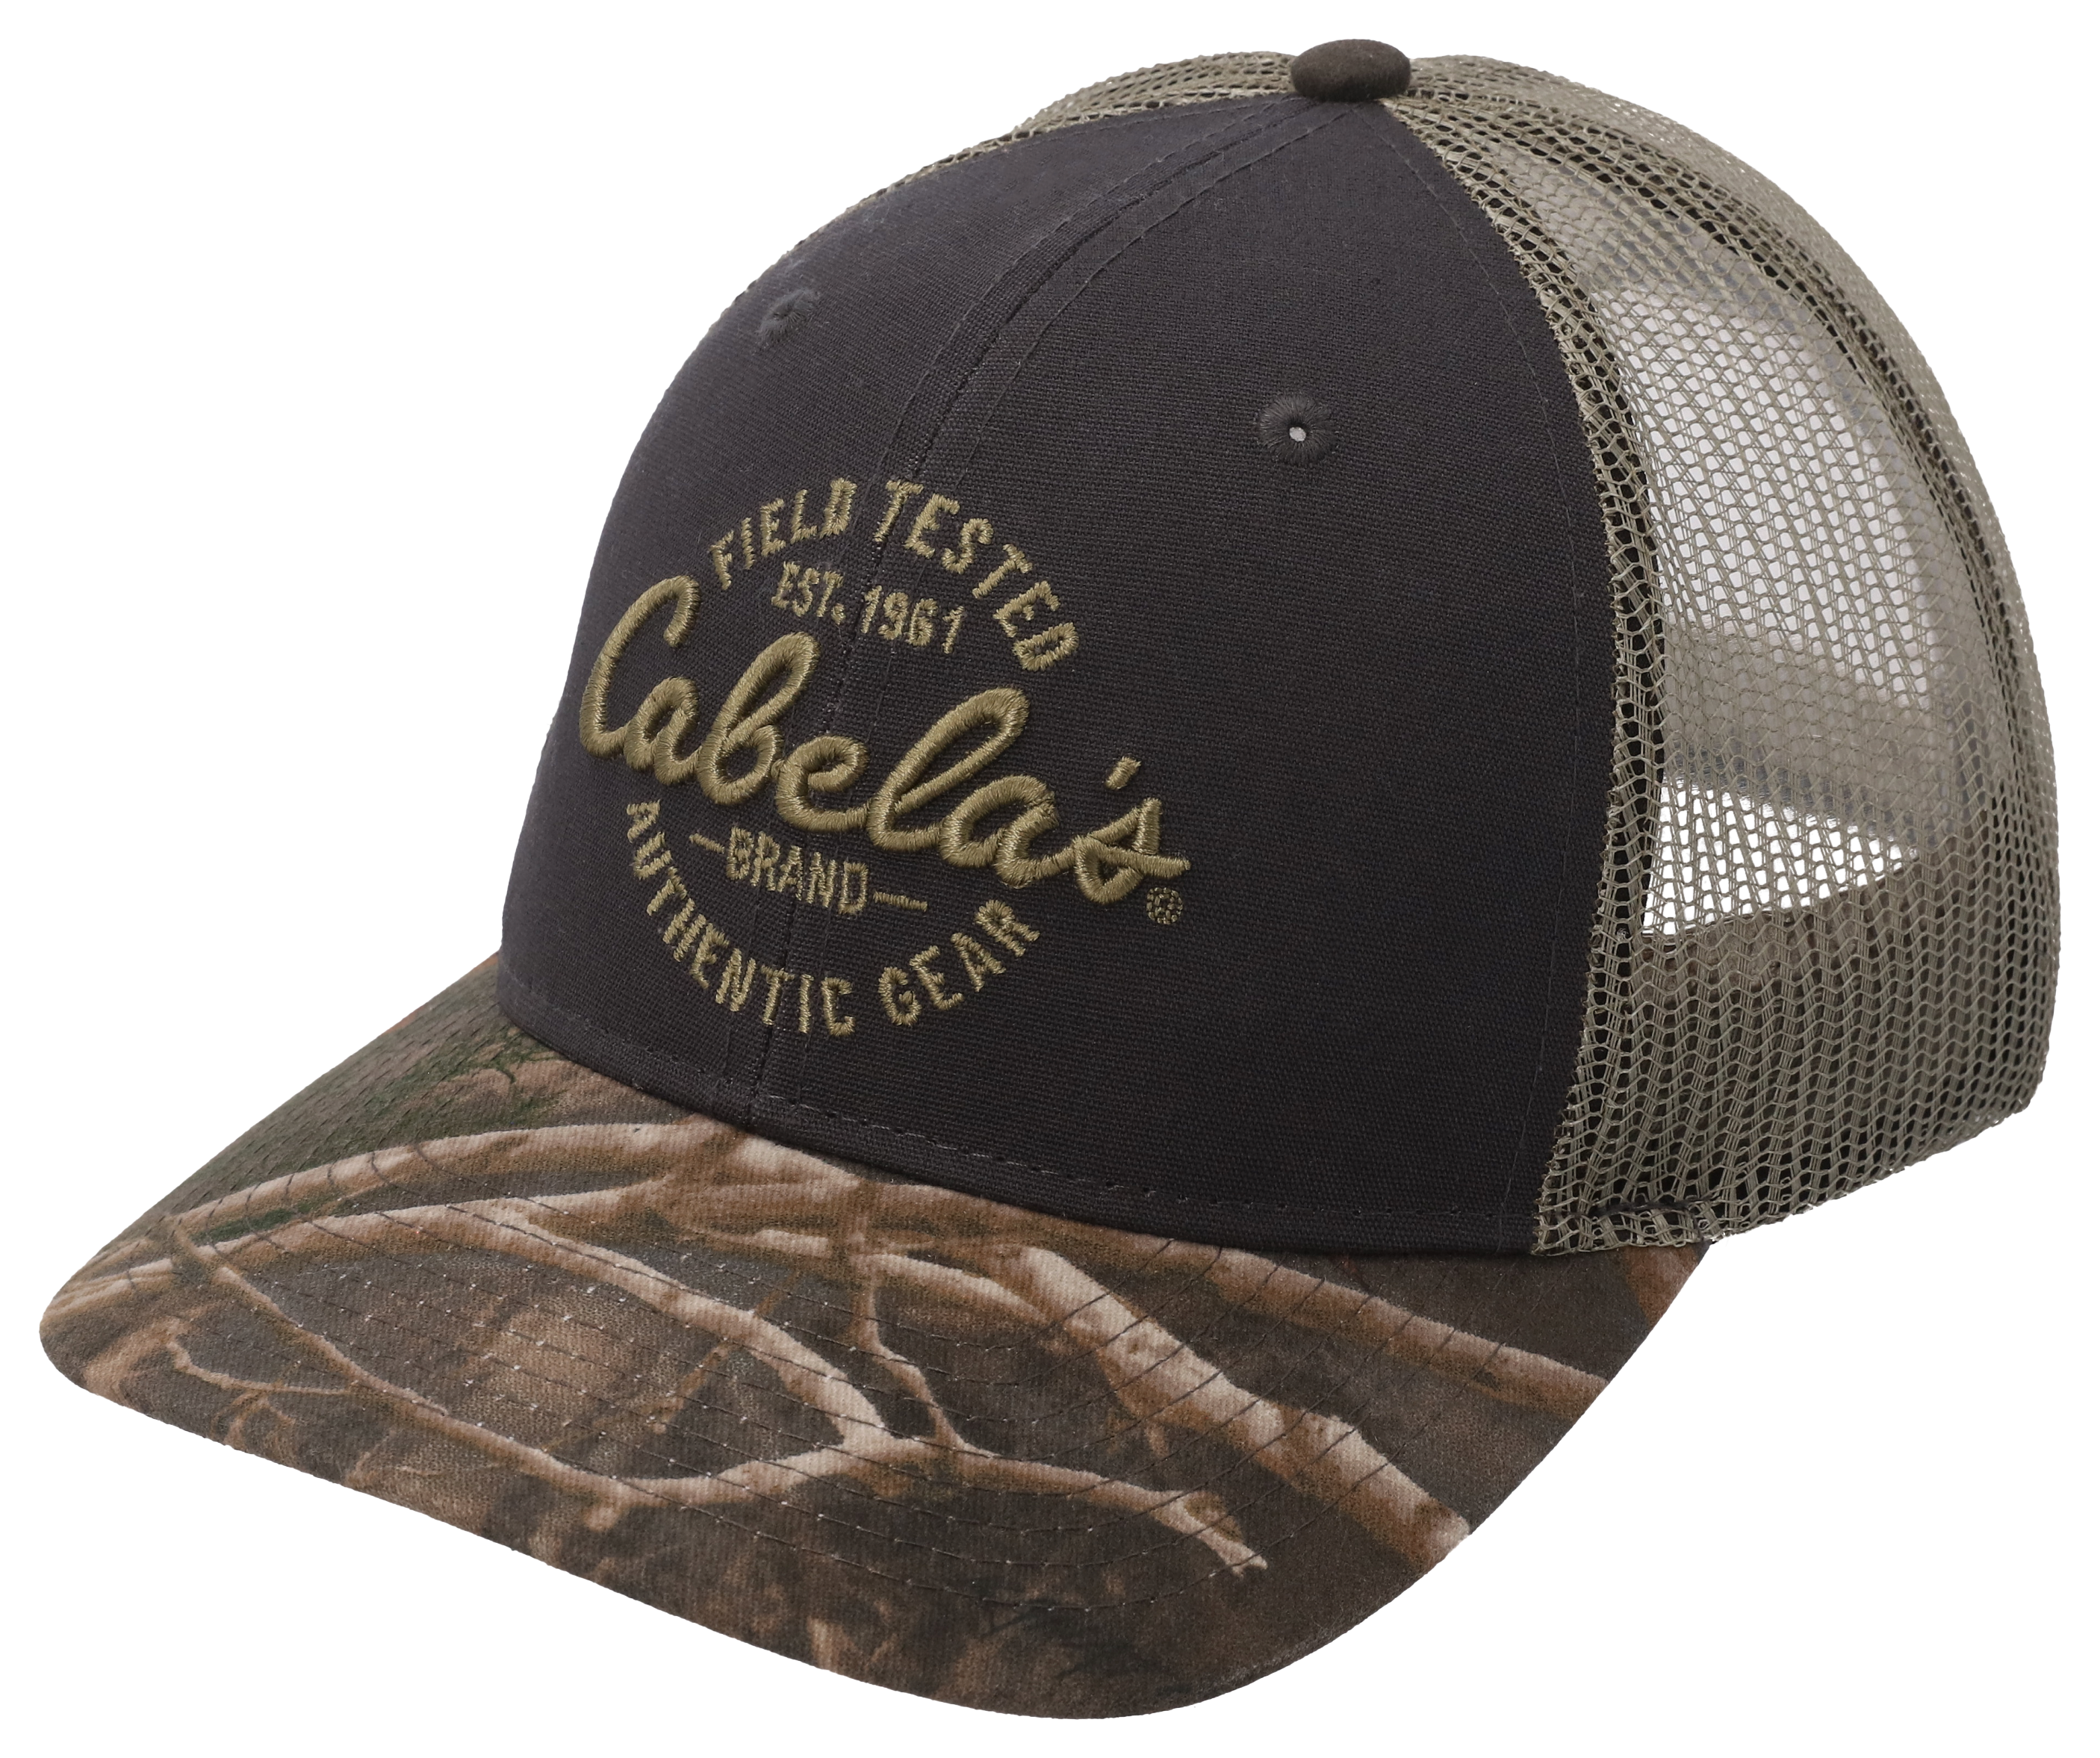 Cabelas Since 1961 Ball Cap Hat Adjustable Baseball